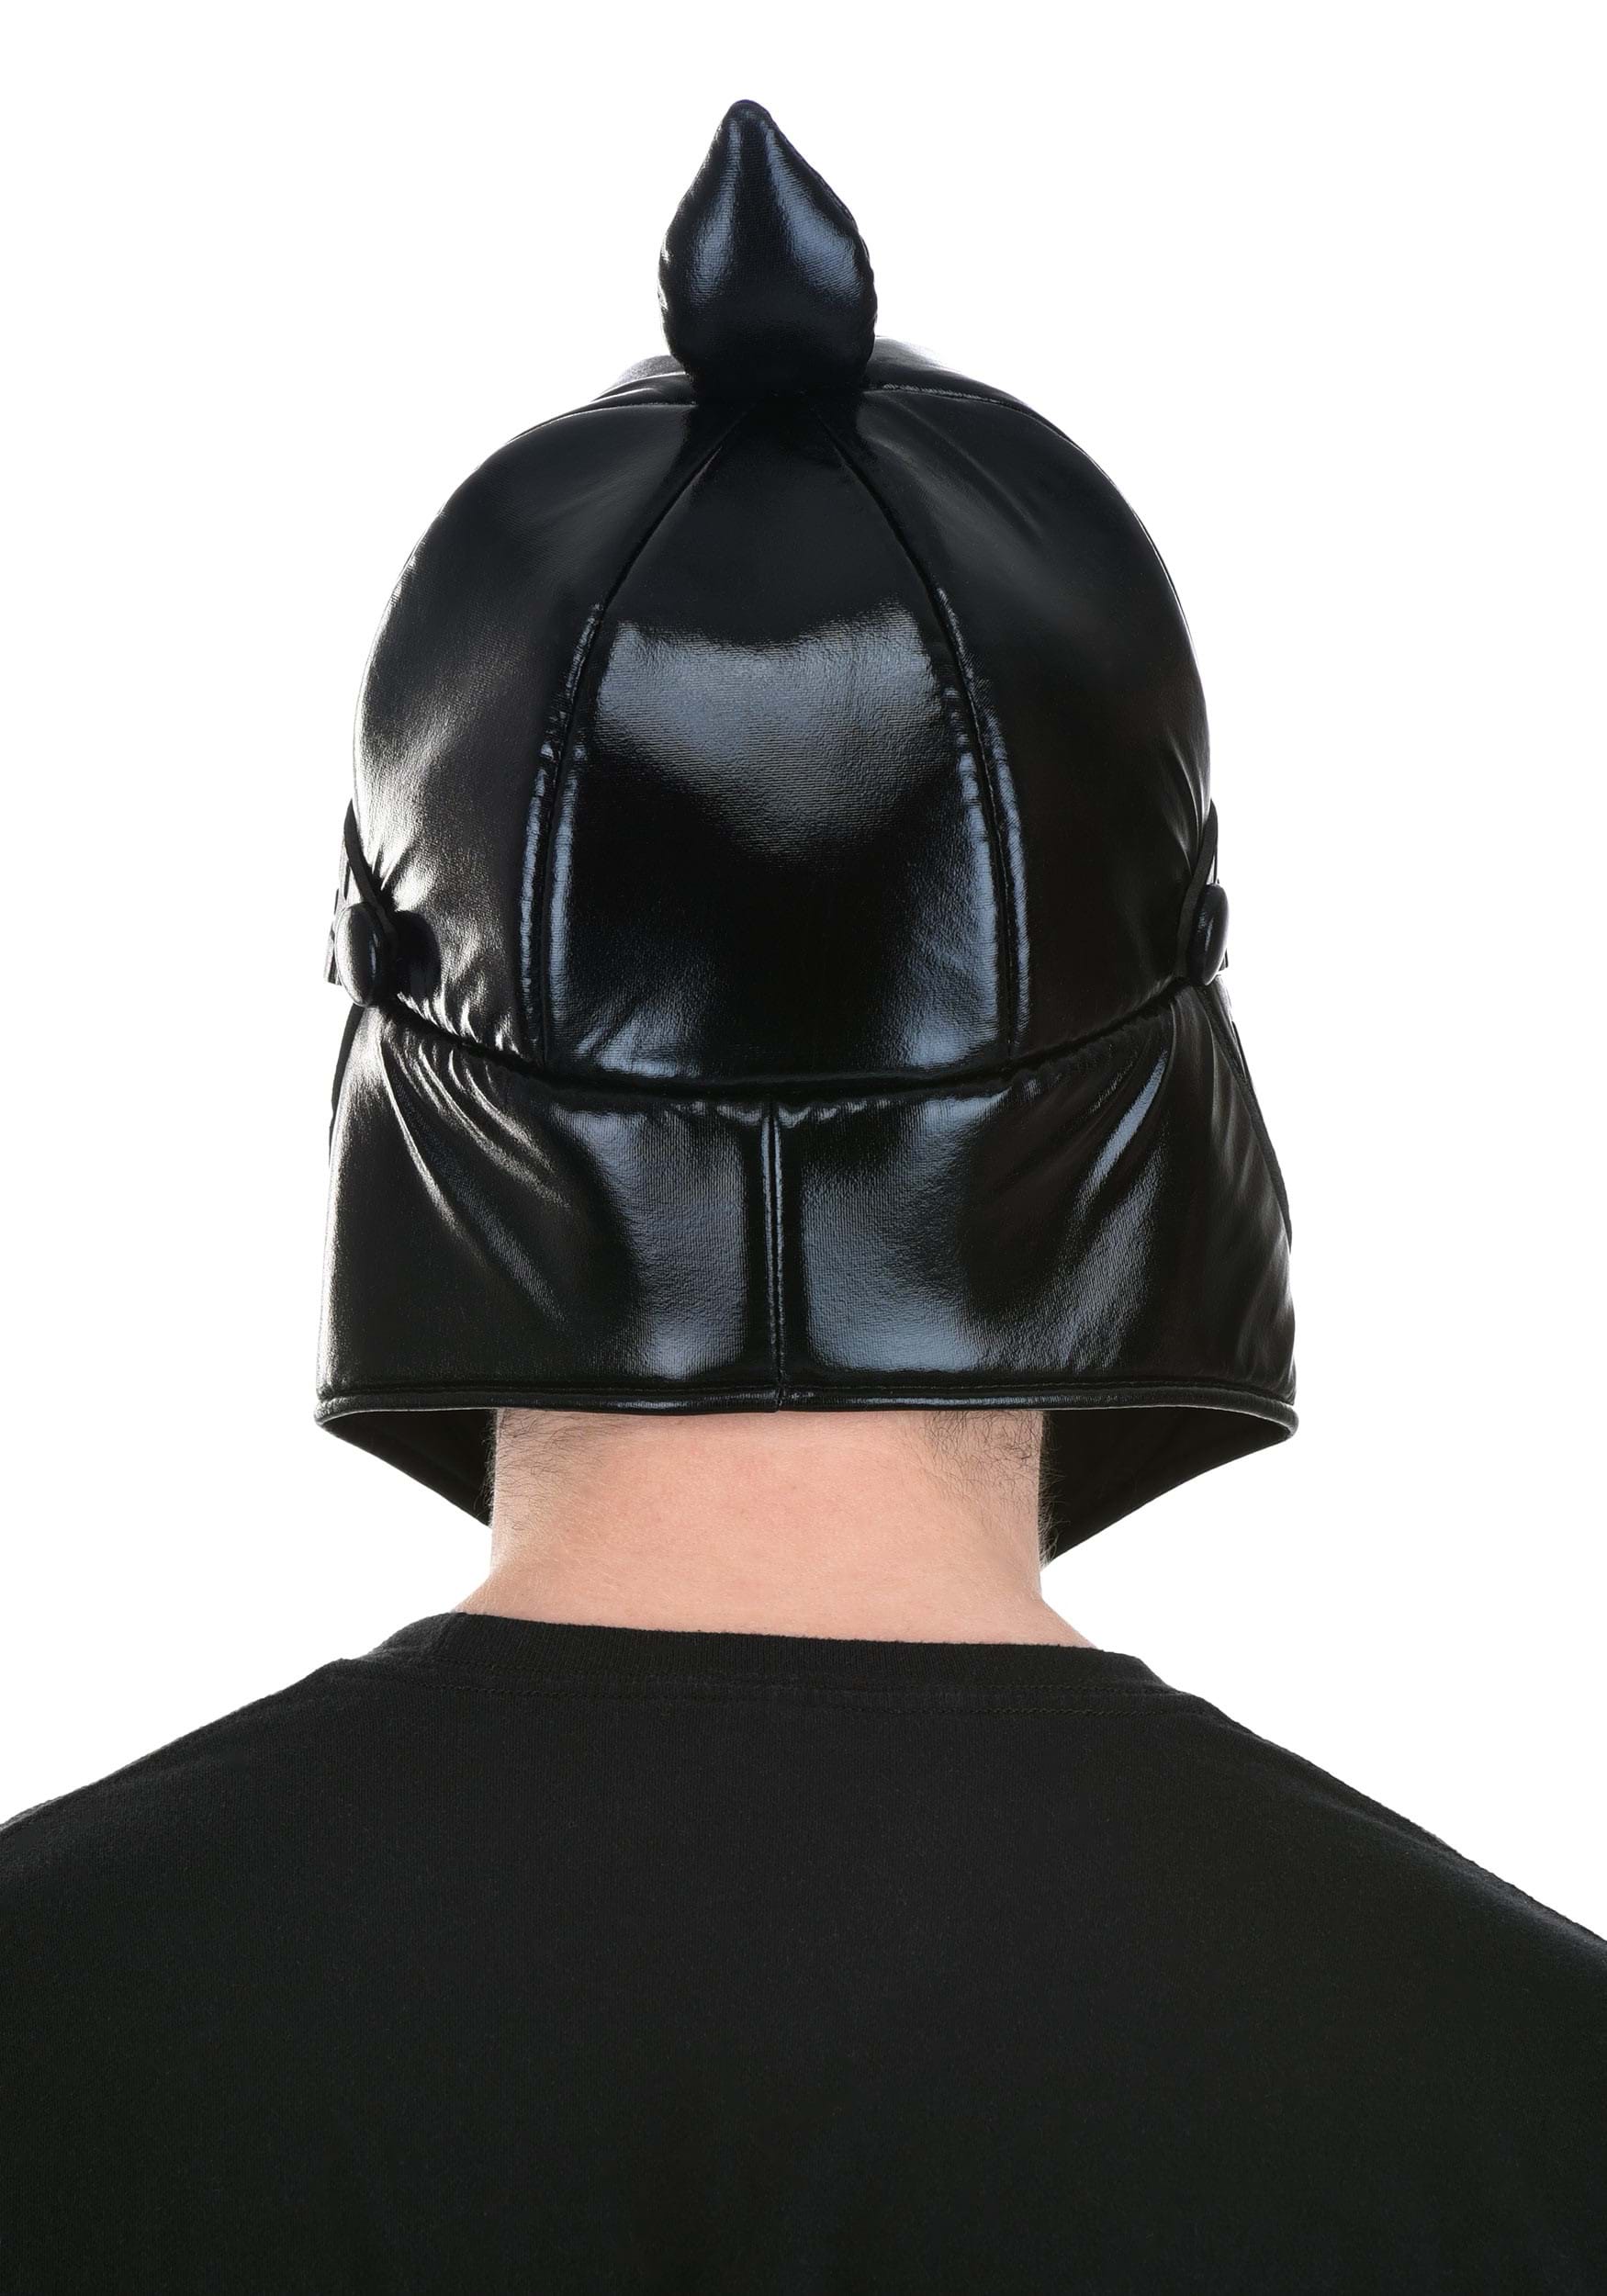 Adult Black Knight Foam Helmet , Knight Fancy Dress Costume Helmets